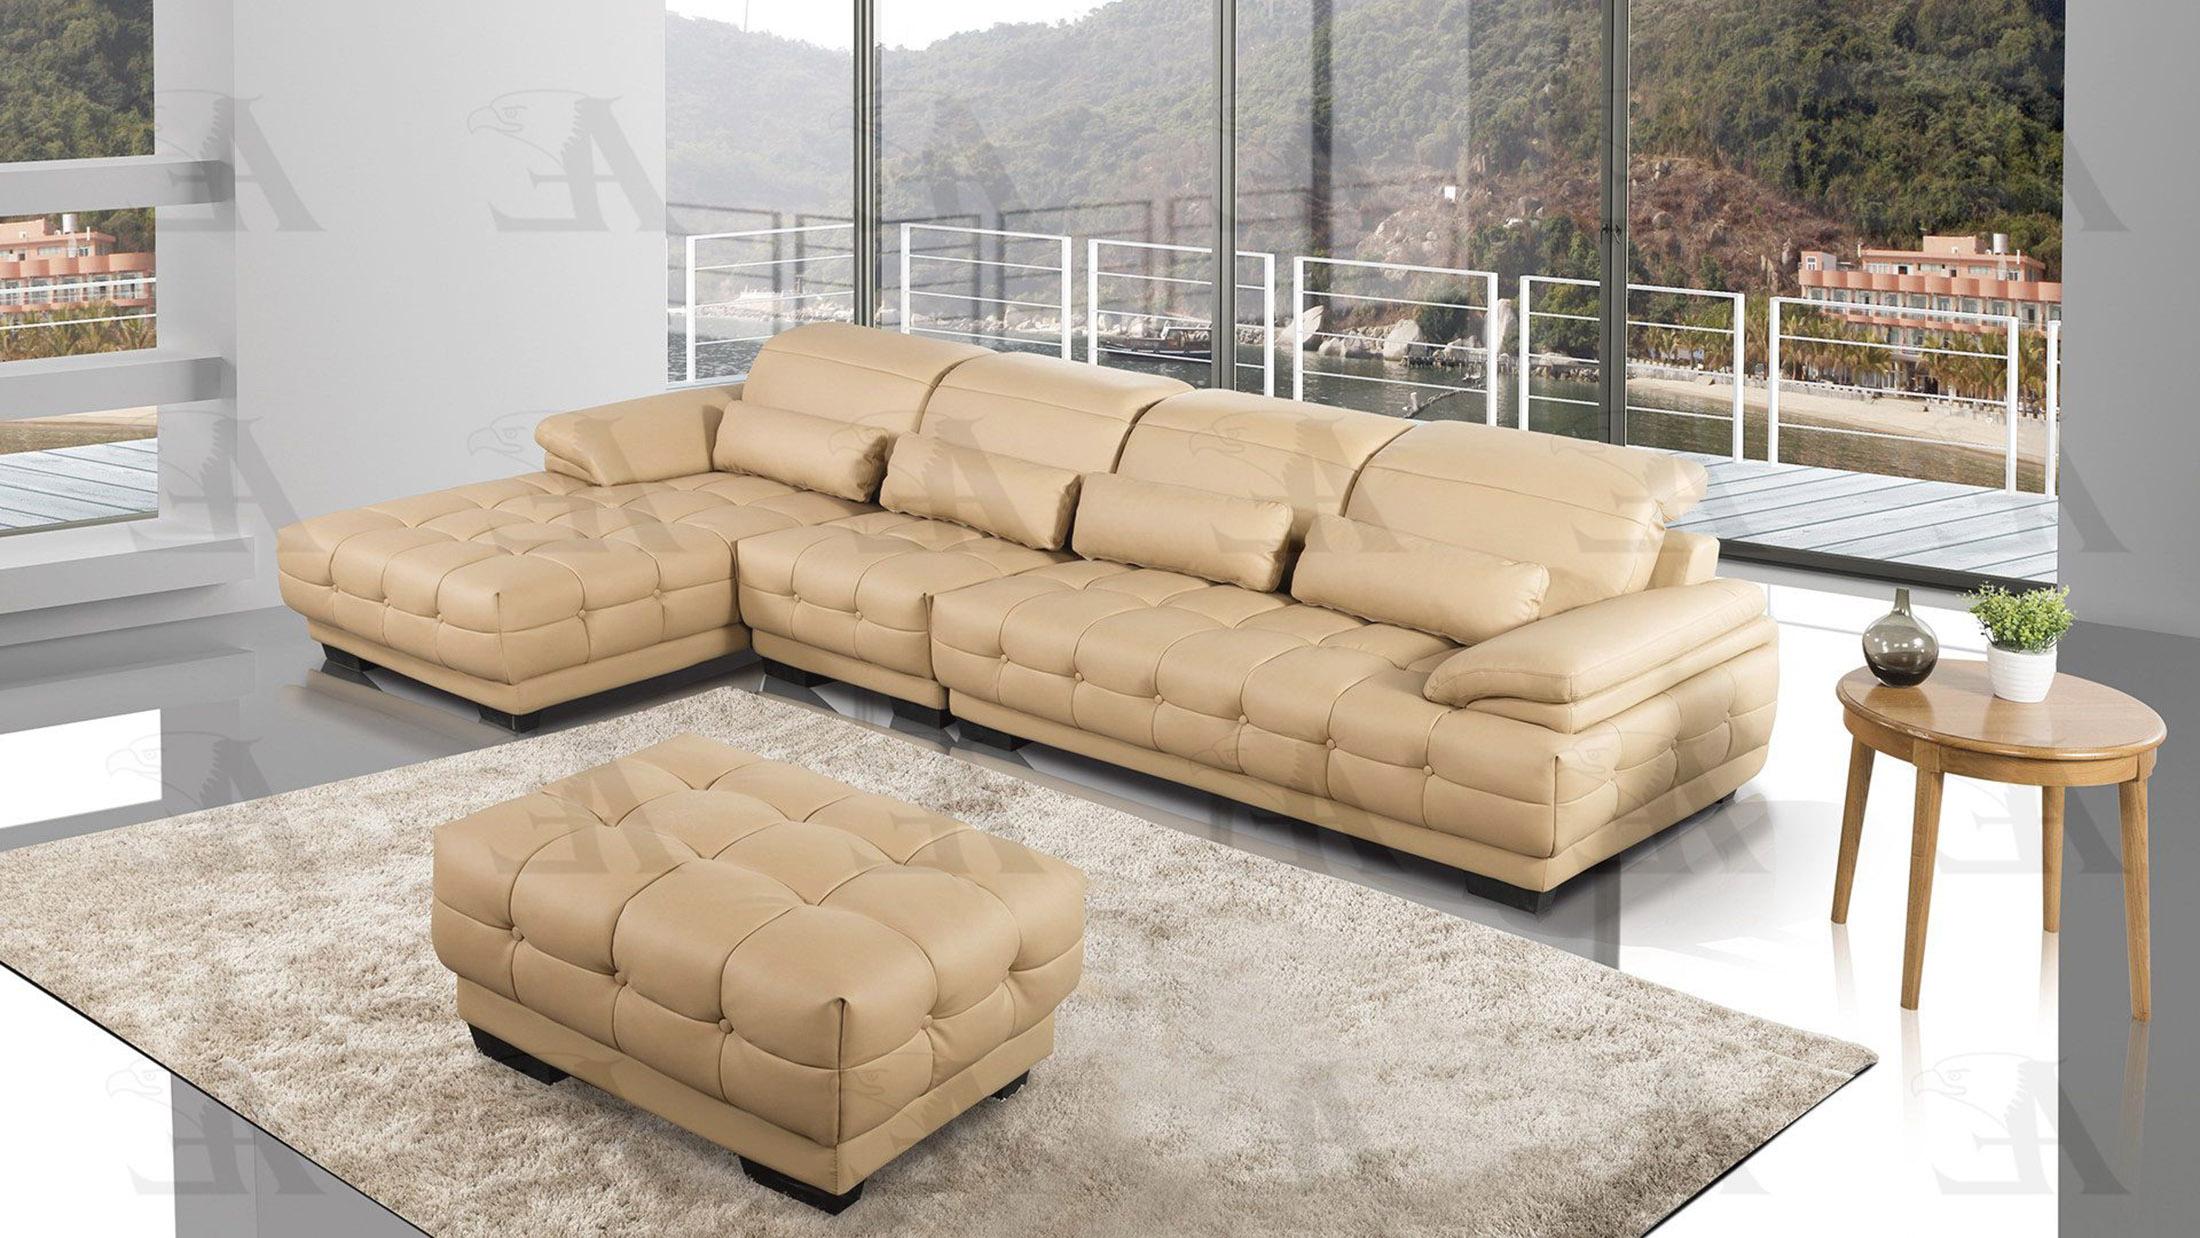 American Eagle Furniture AE-L296-BK Sofa Chaise Chair and Ottoman Set